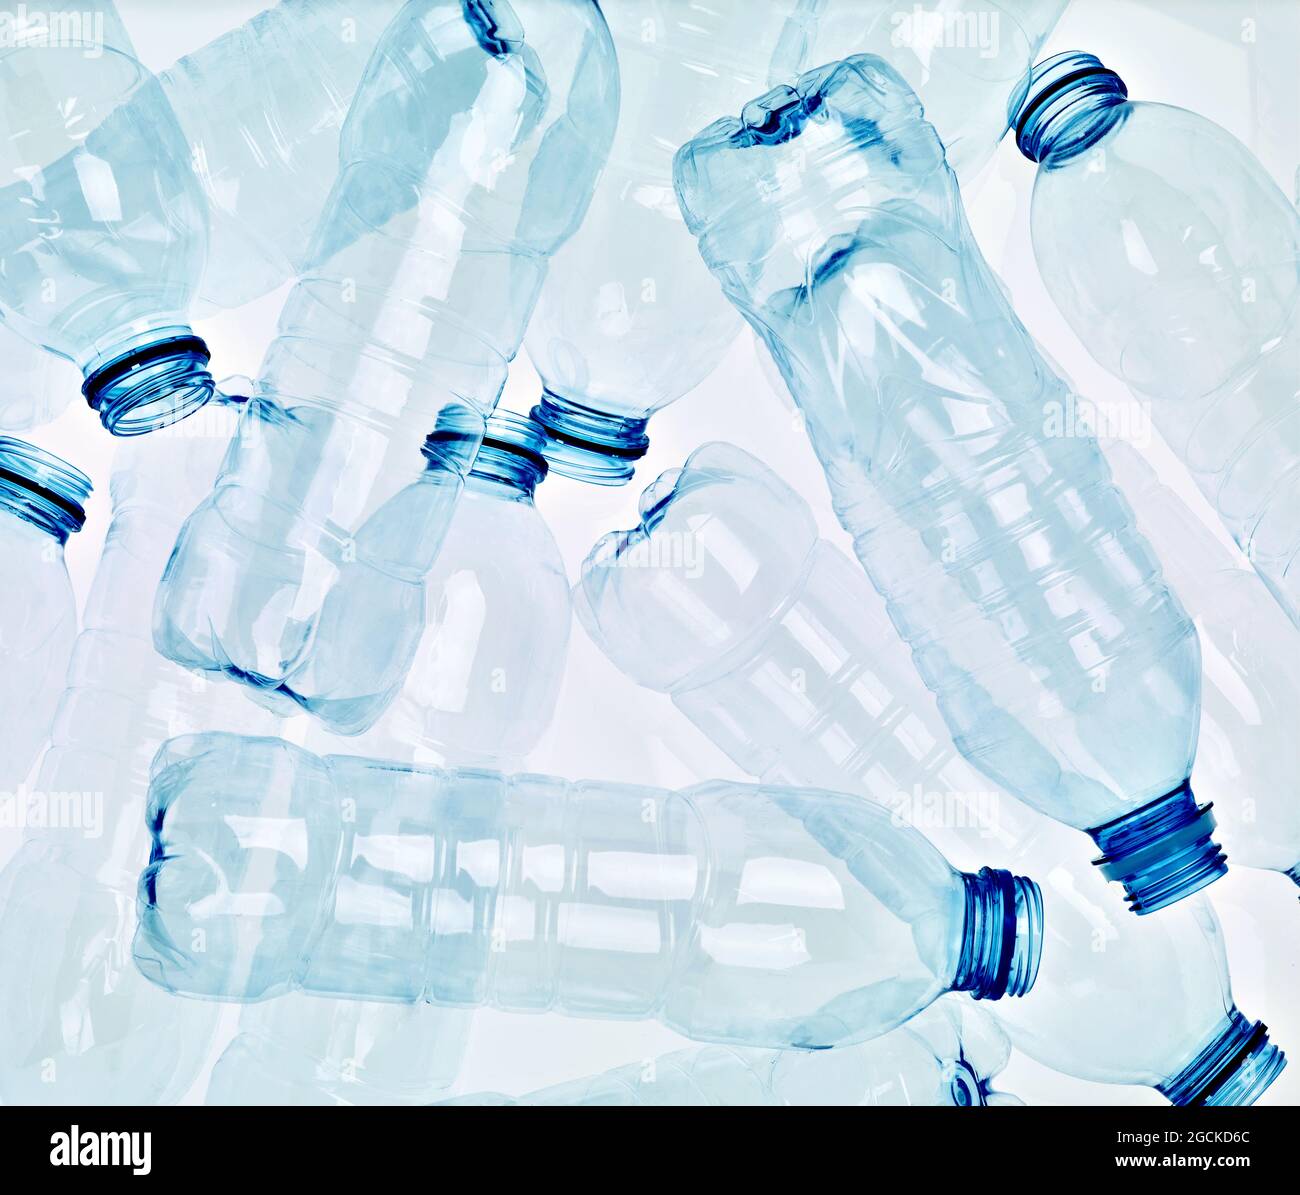 Plastikflasche leer transparent Recycling-Behälter Wasser Umwelt trinken Müll Getränk Stockfoto